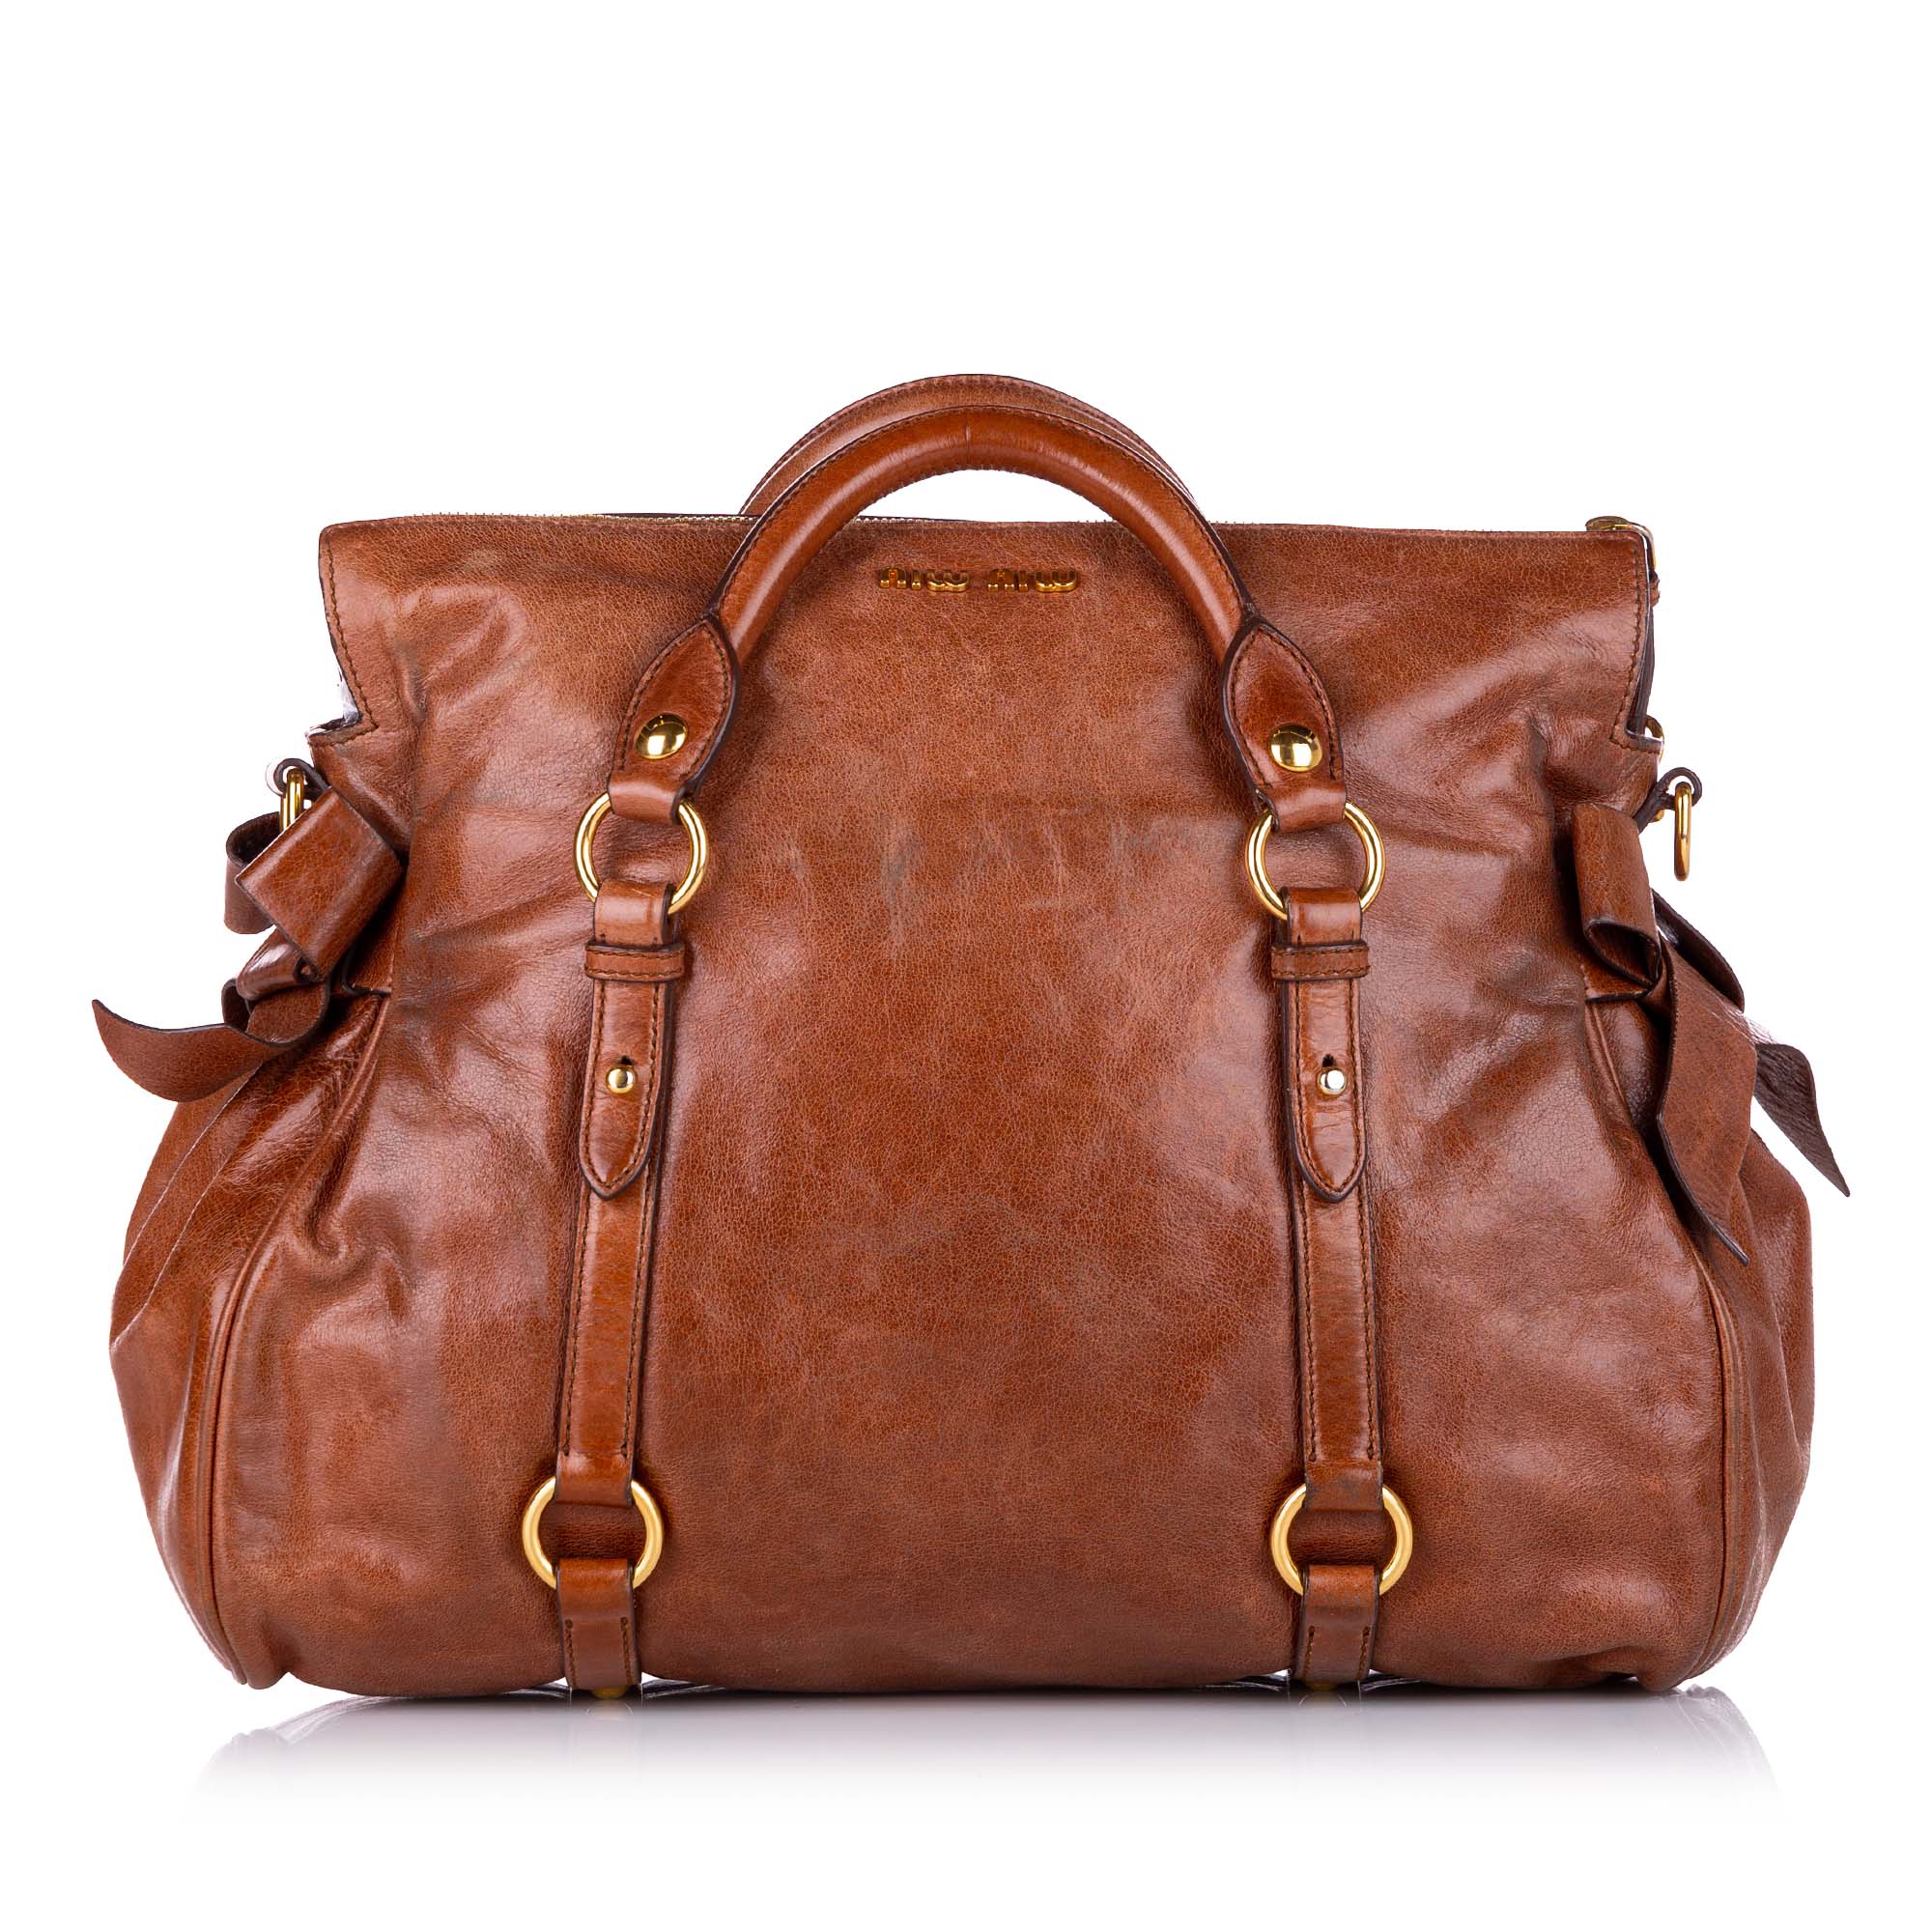 Miu Miu - Authenticated Bow Bag Handbag - Leather Black for Women, Very Good Condition